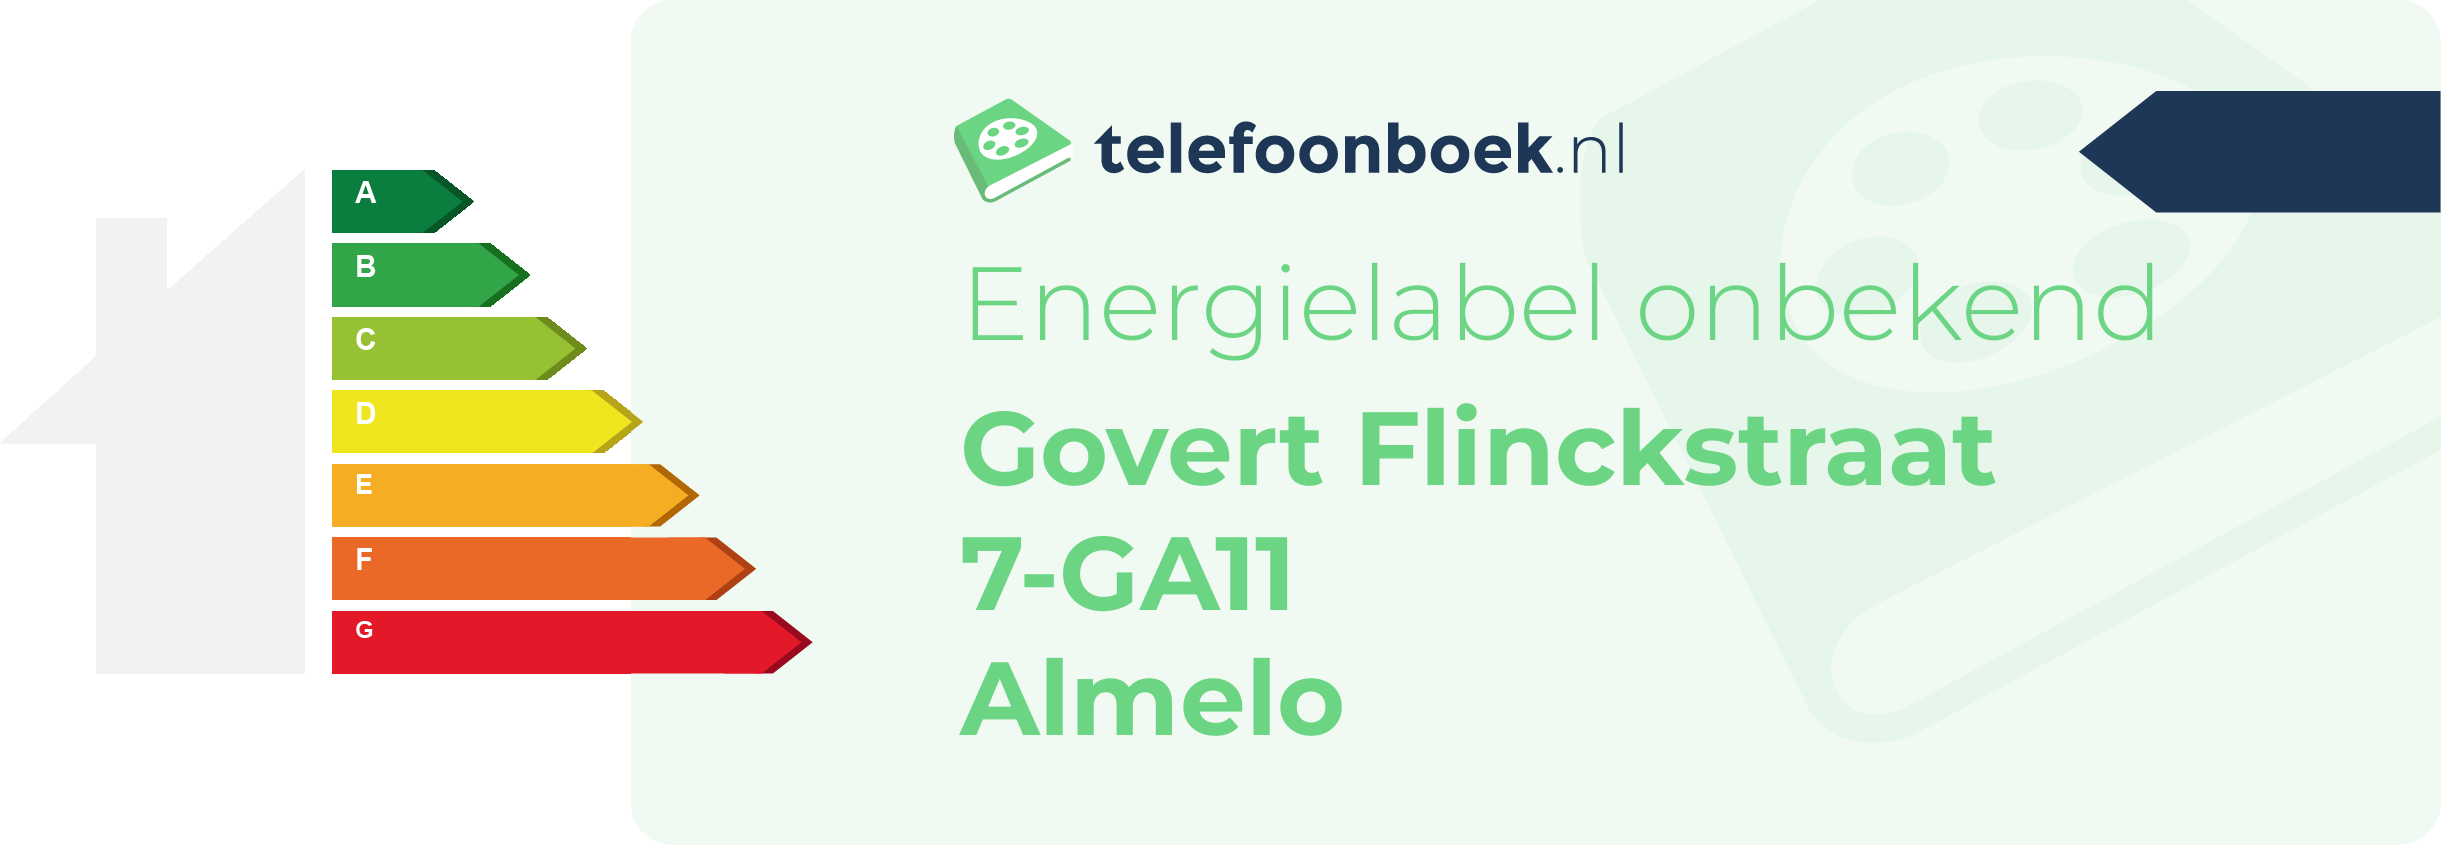 Energielabel Govert Flinckstraat 7-GA11 Almelo